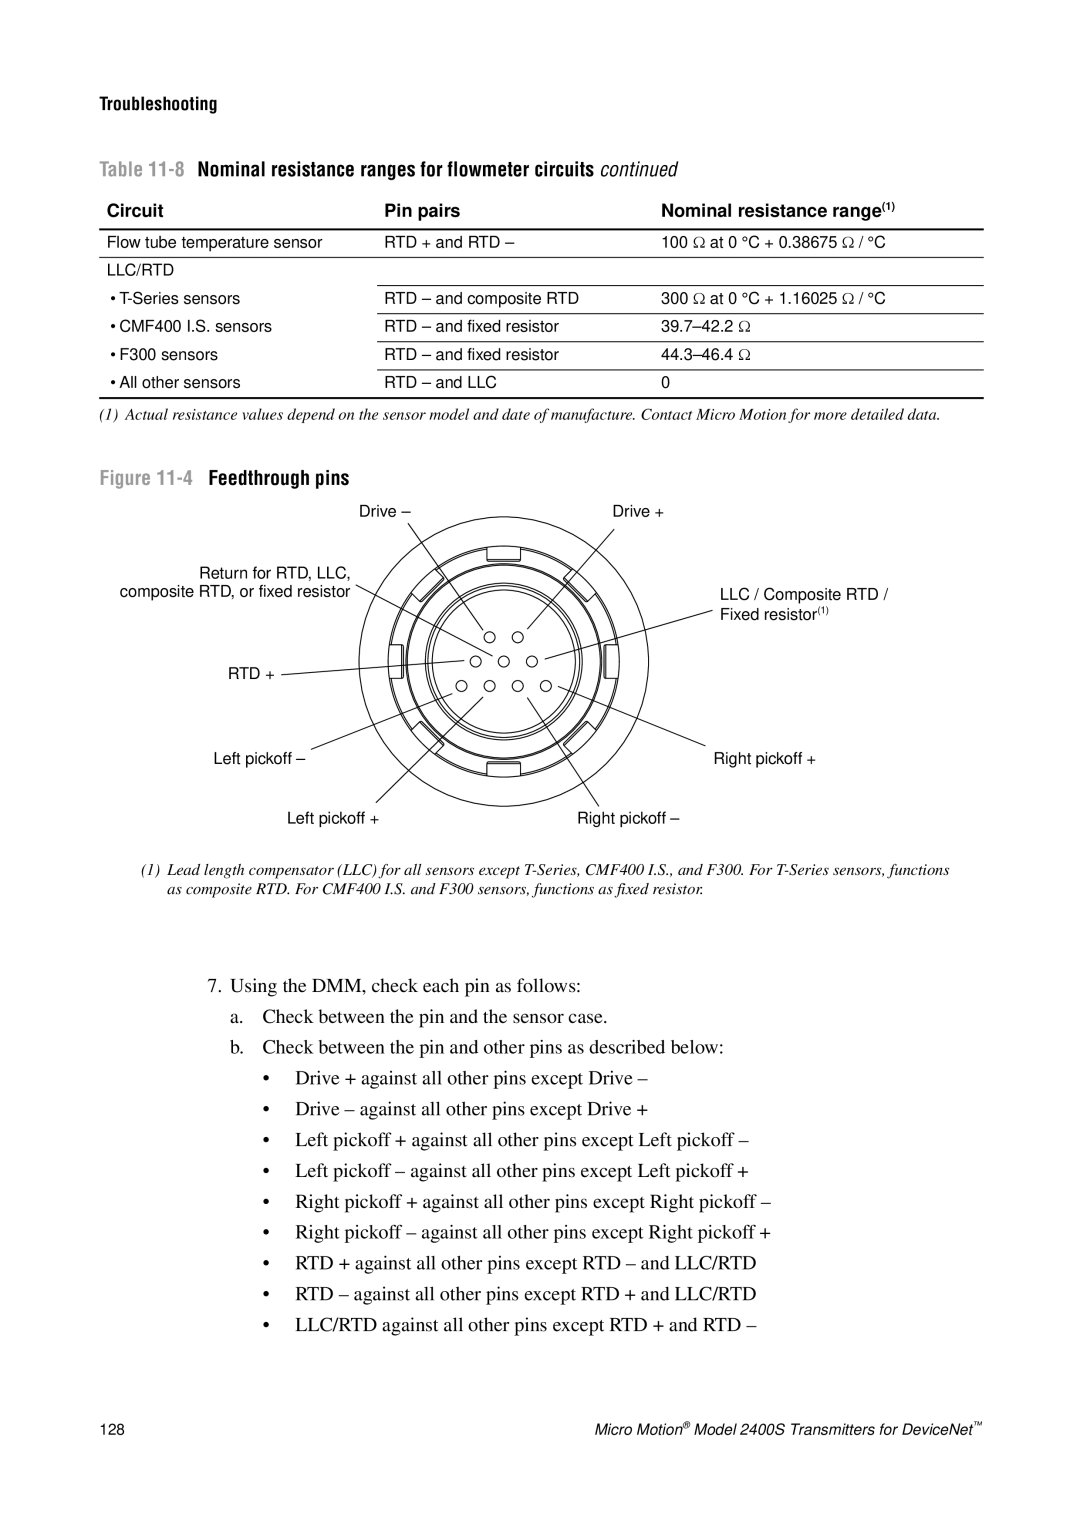 Emerson Process Management 2400S manual 4 Feedthrough pins 